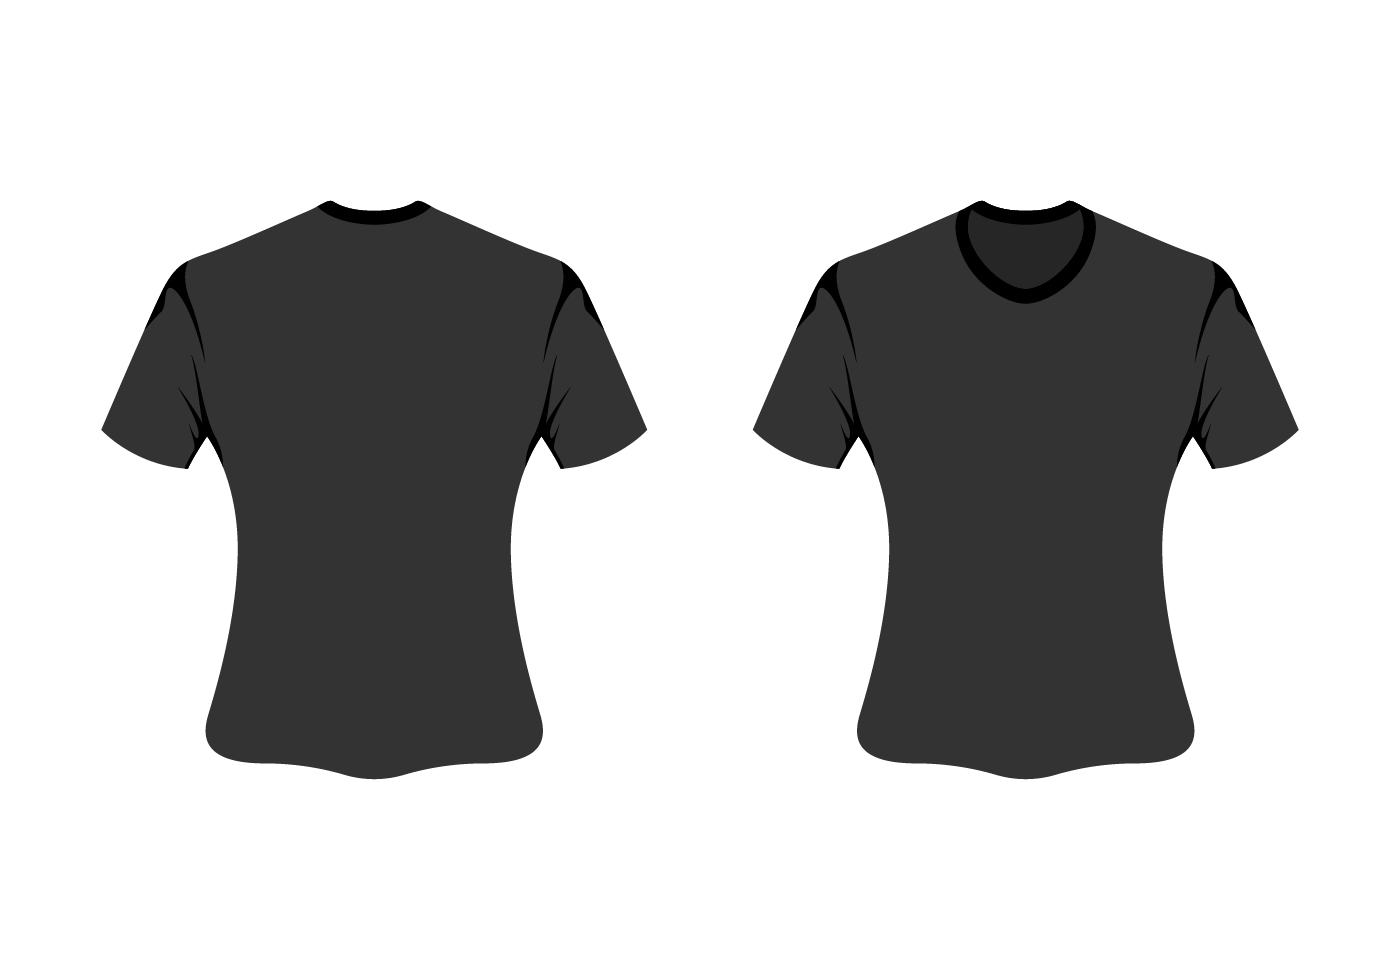 Download T-Shirt Template Illustrator